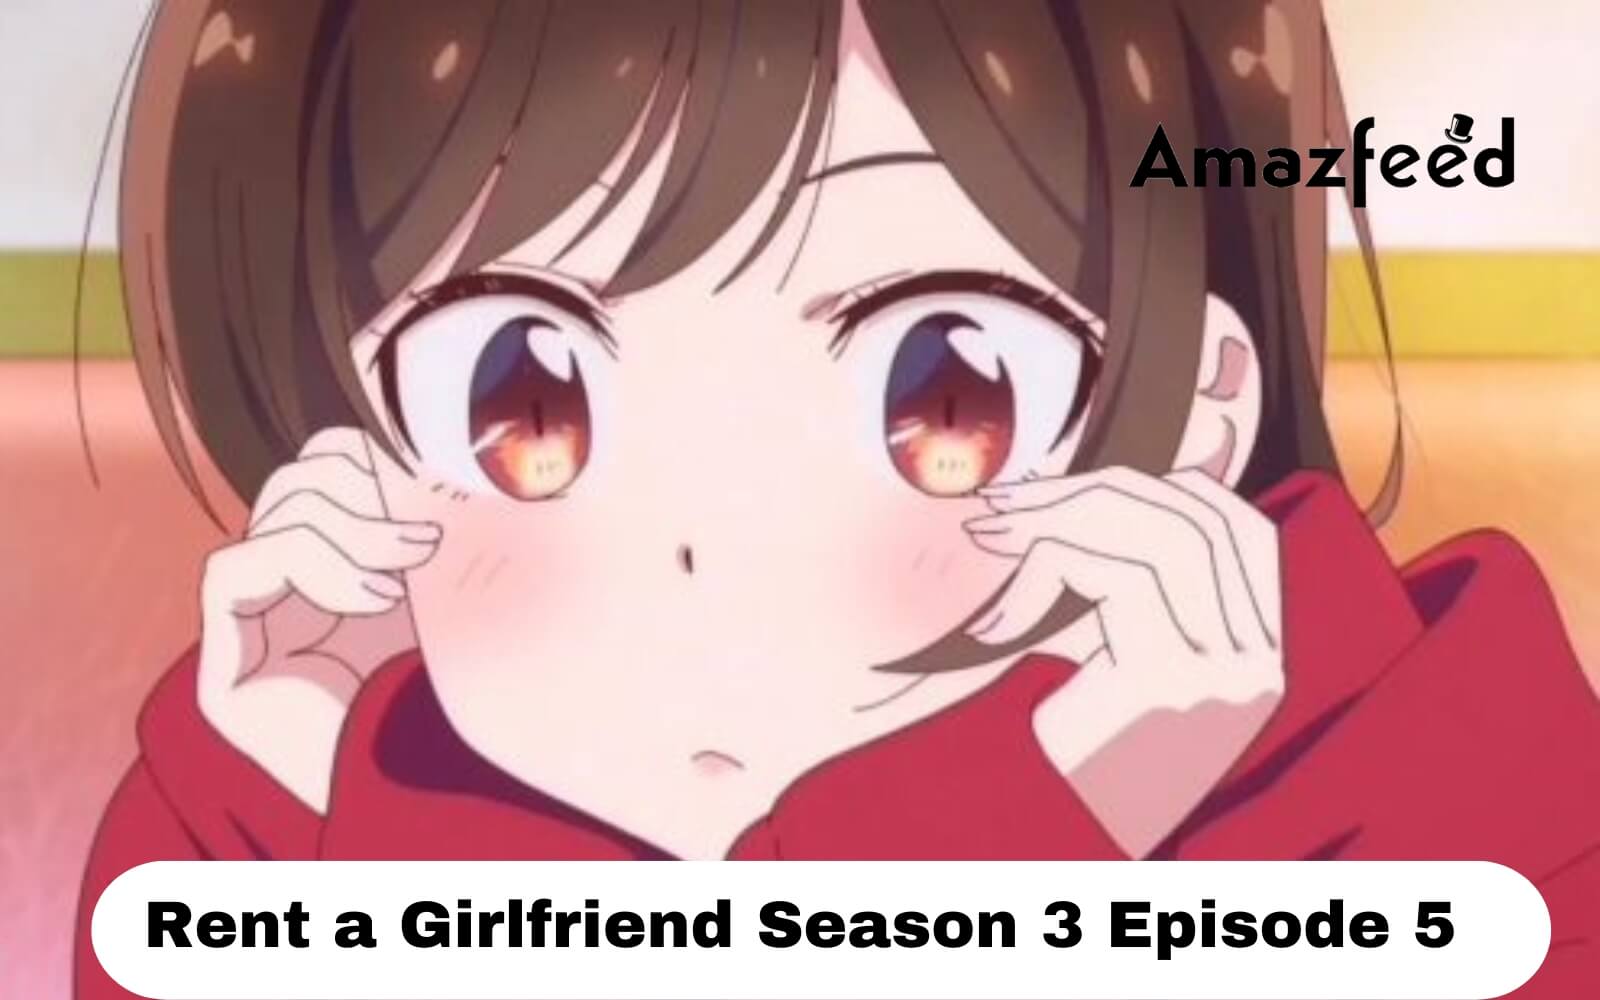 Rent-a-Girlfriend season 3 episode 5: Release date, where to watch